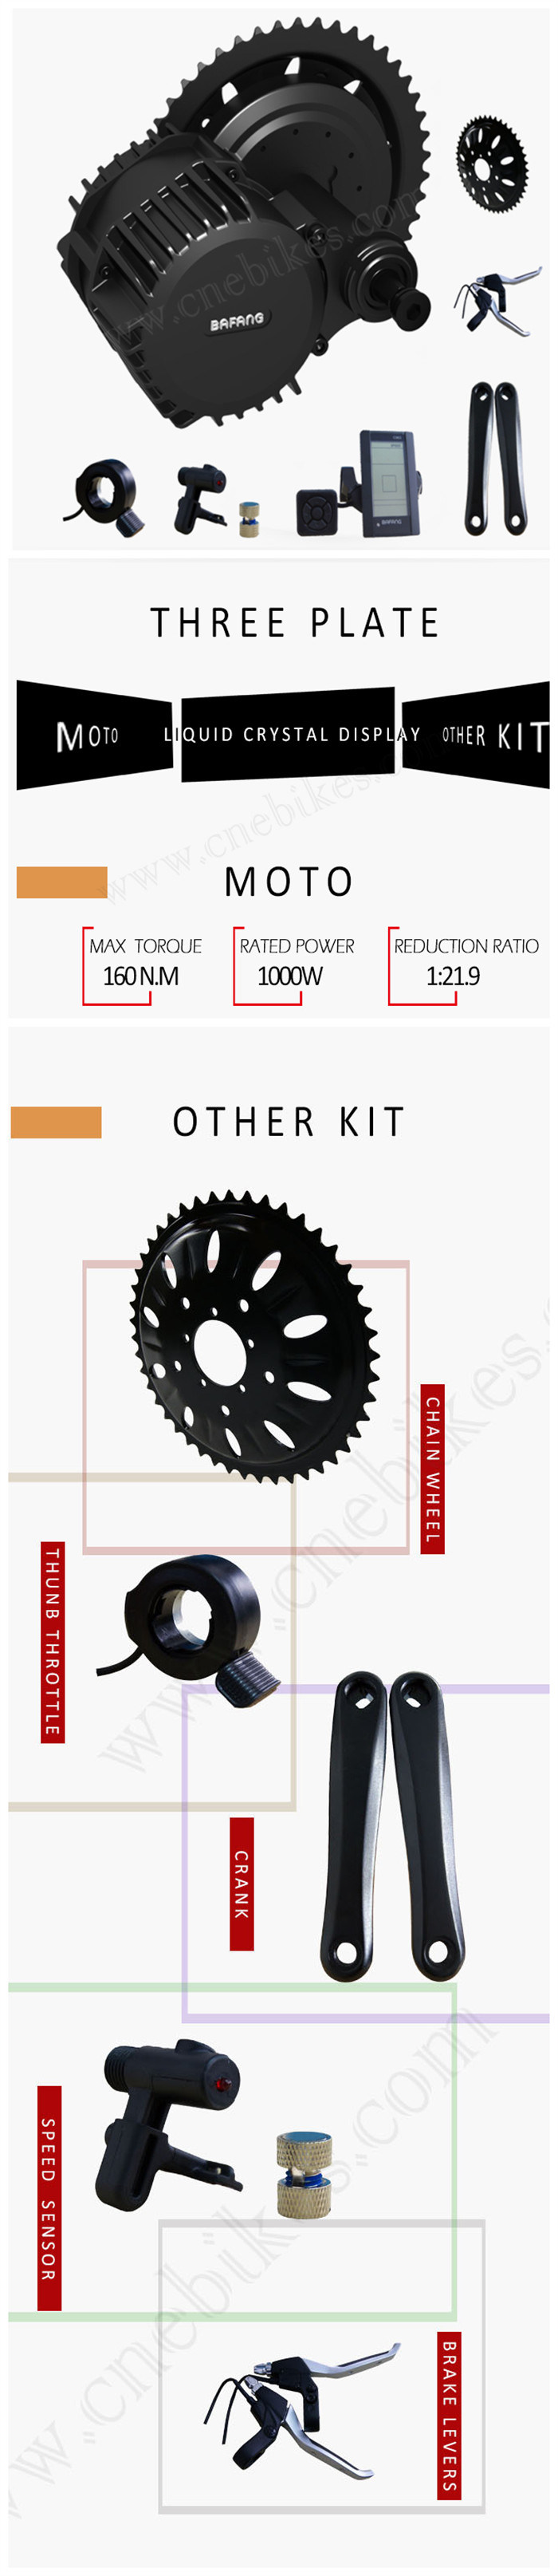 Bafang Bbshd/BBS03/Mmg320 Electric Bike Kit 1000W MID Motor Conversion Kit